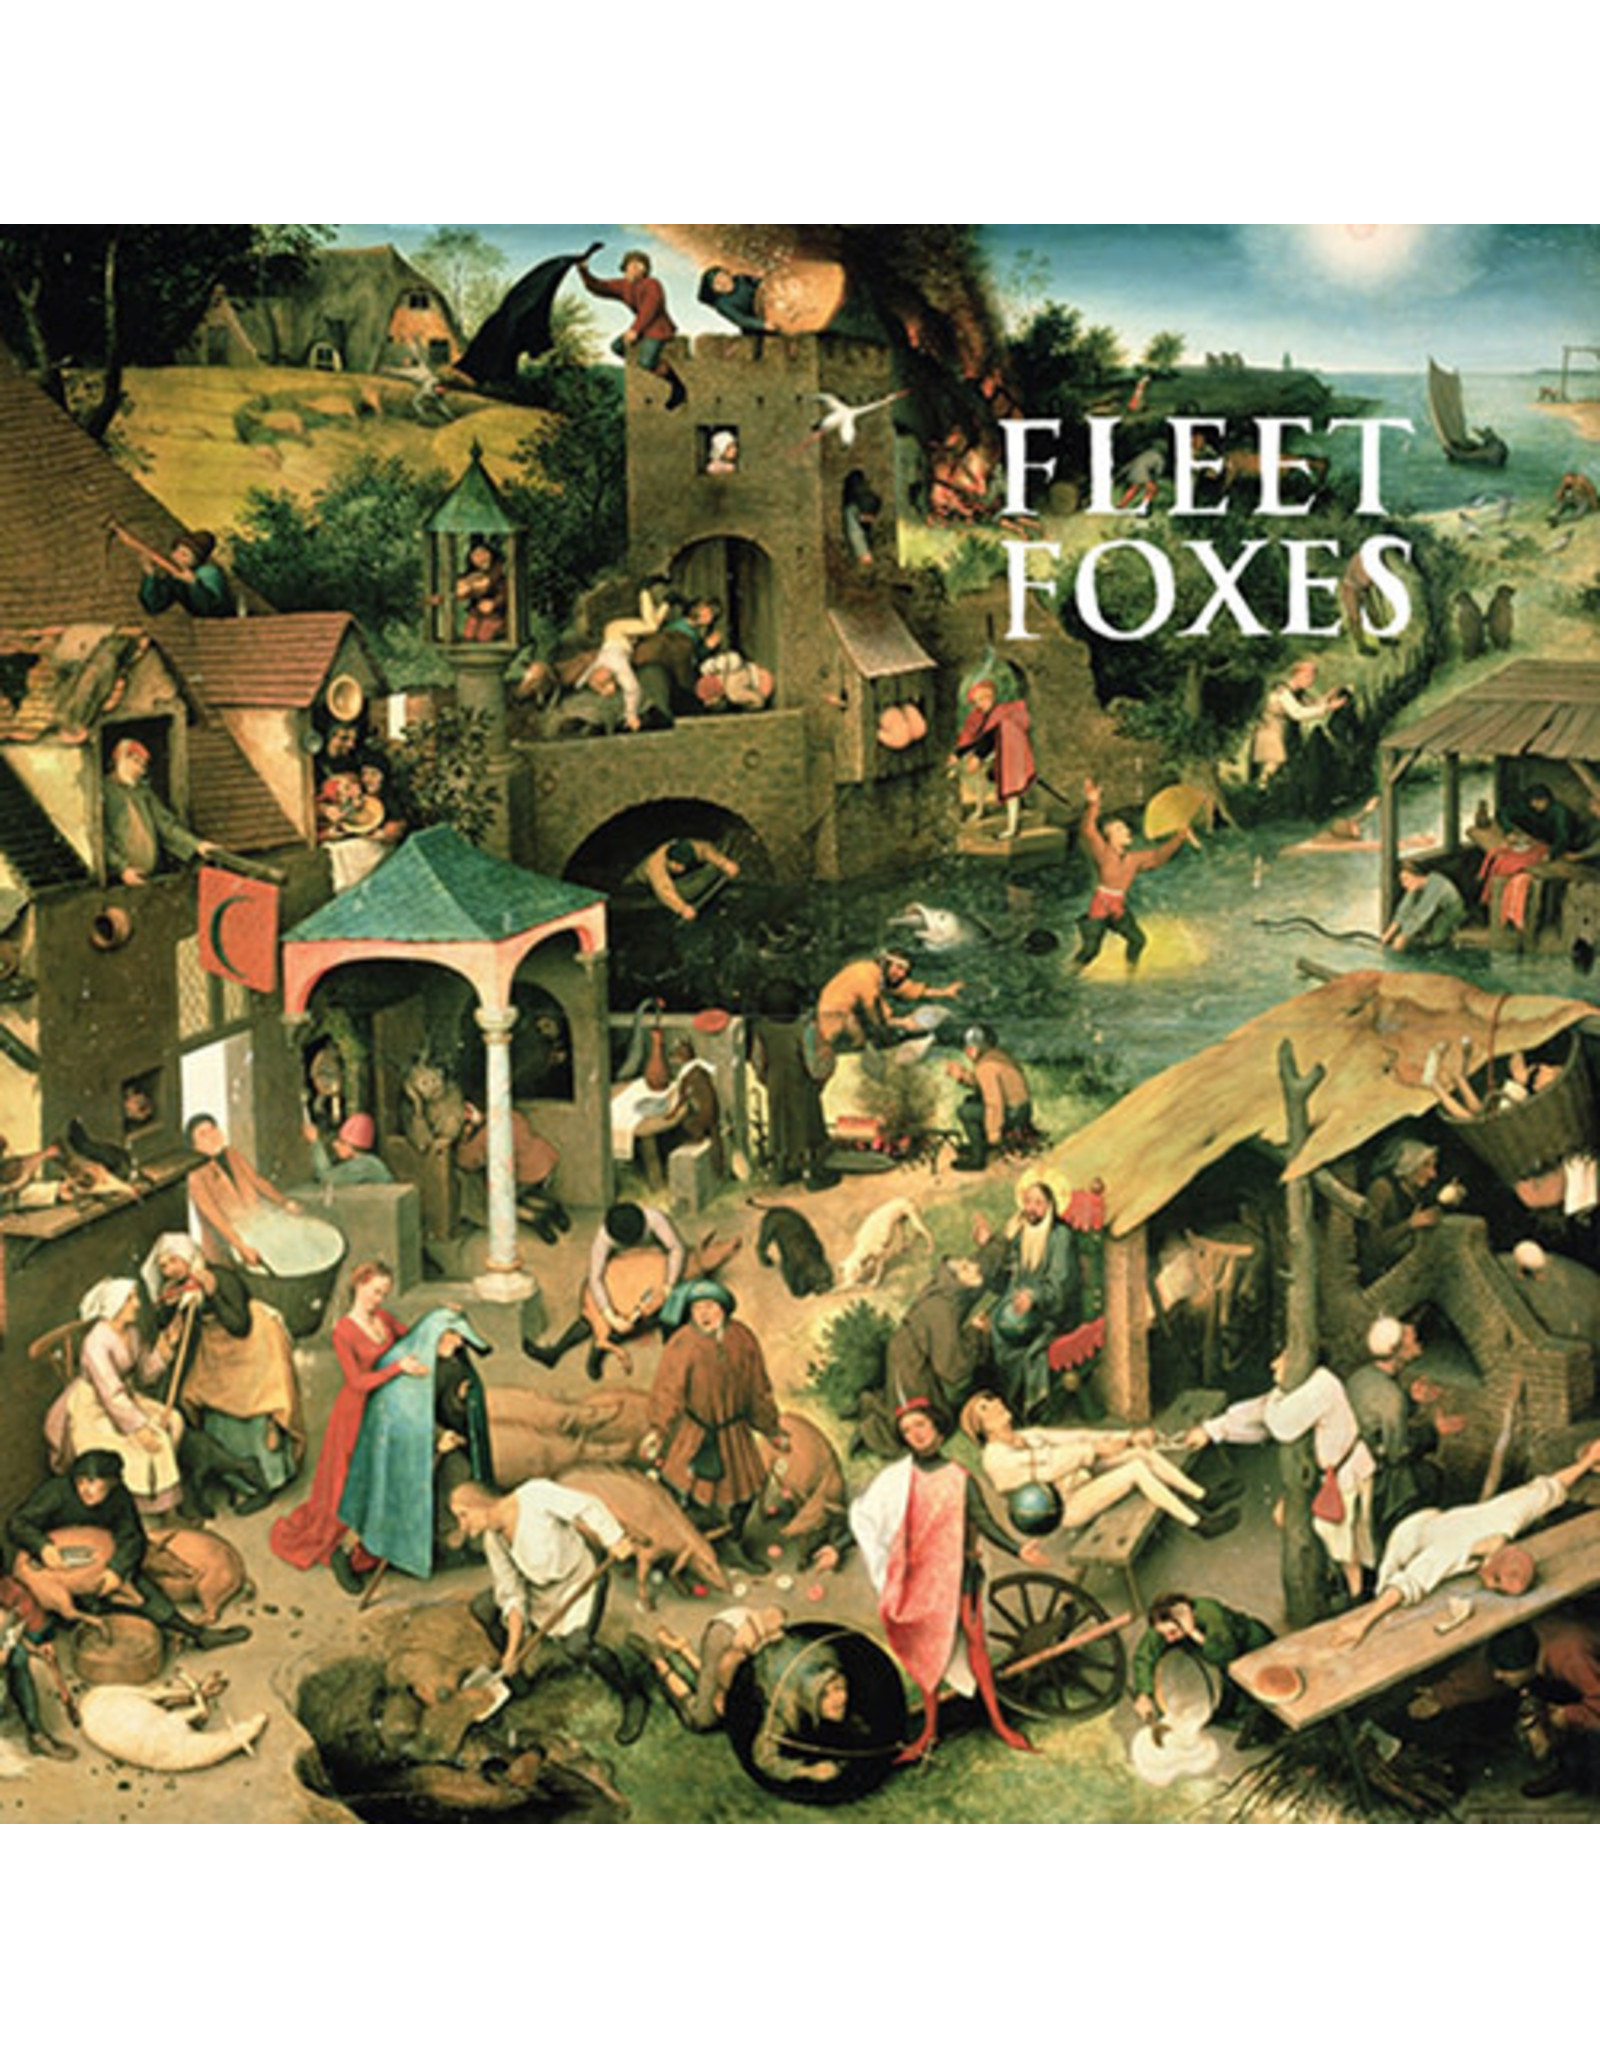 Sub Pop Fleet Foxes: Fleet Foxes/Sun Giant EP LP